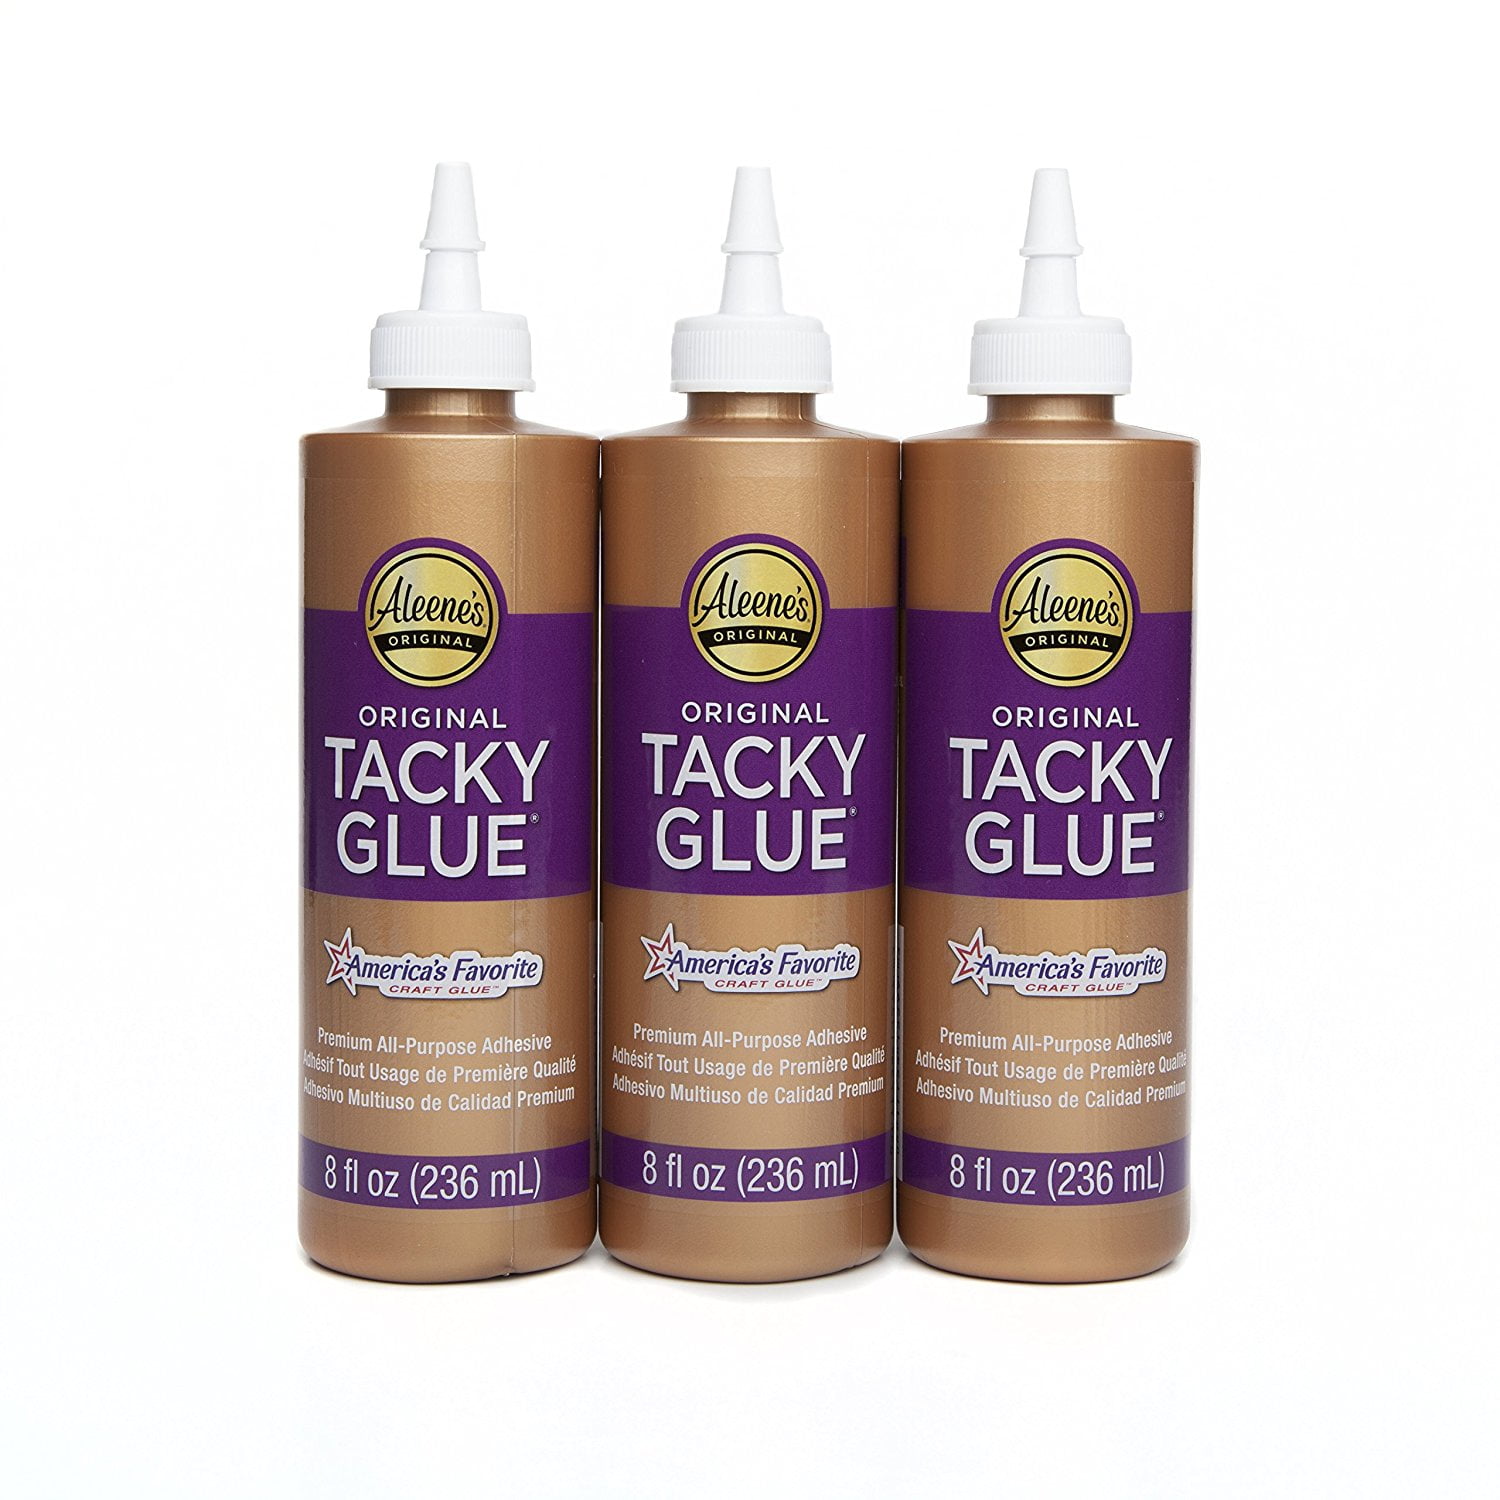 Aleene's Tacky Spray 11 oz, Clear Permanent All-Purpose Spray Adhesive